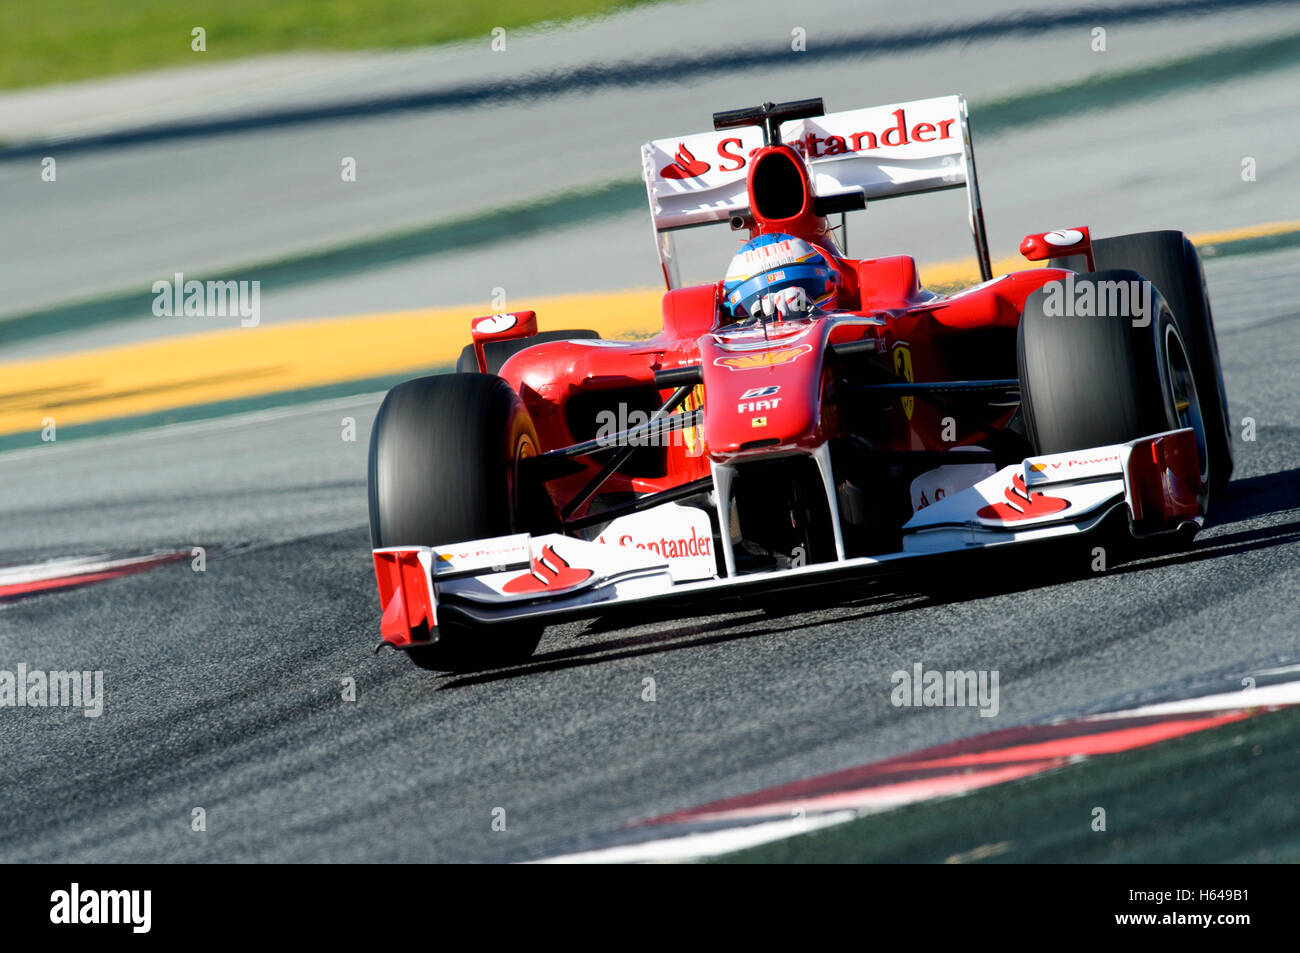 Motorsport, Fernando Alonso, SPA, im Ferrari F10 Rennwagen, Formel-1-Tests auf dem Circuit de Catalunya Rennen verfolgen in Stockfoto